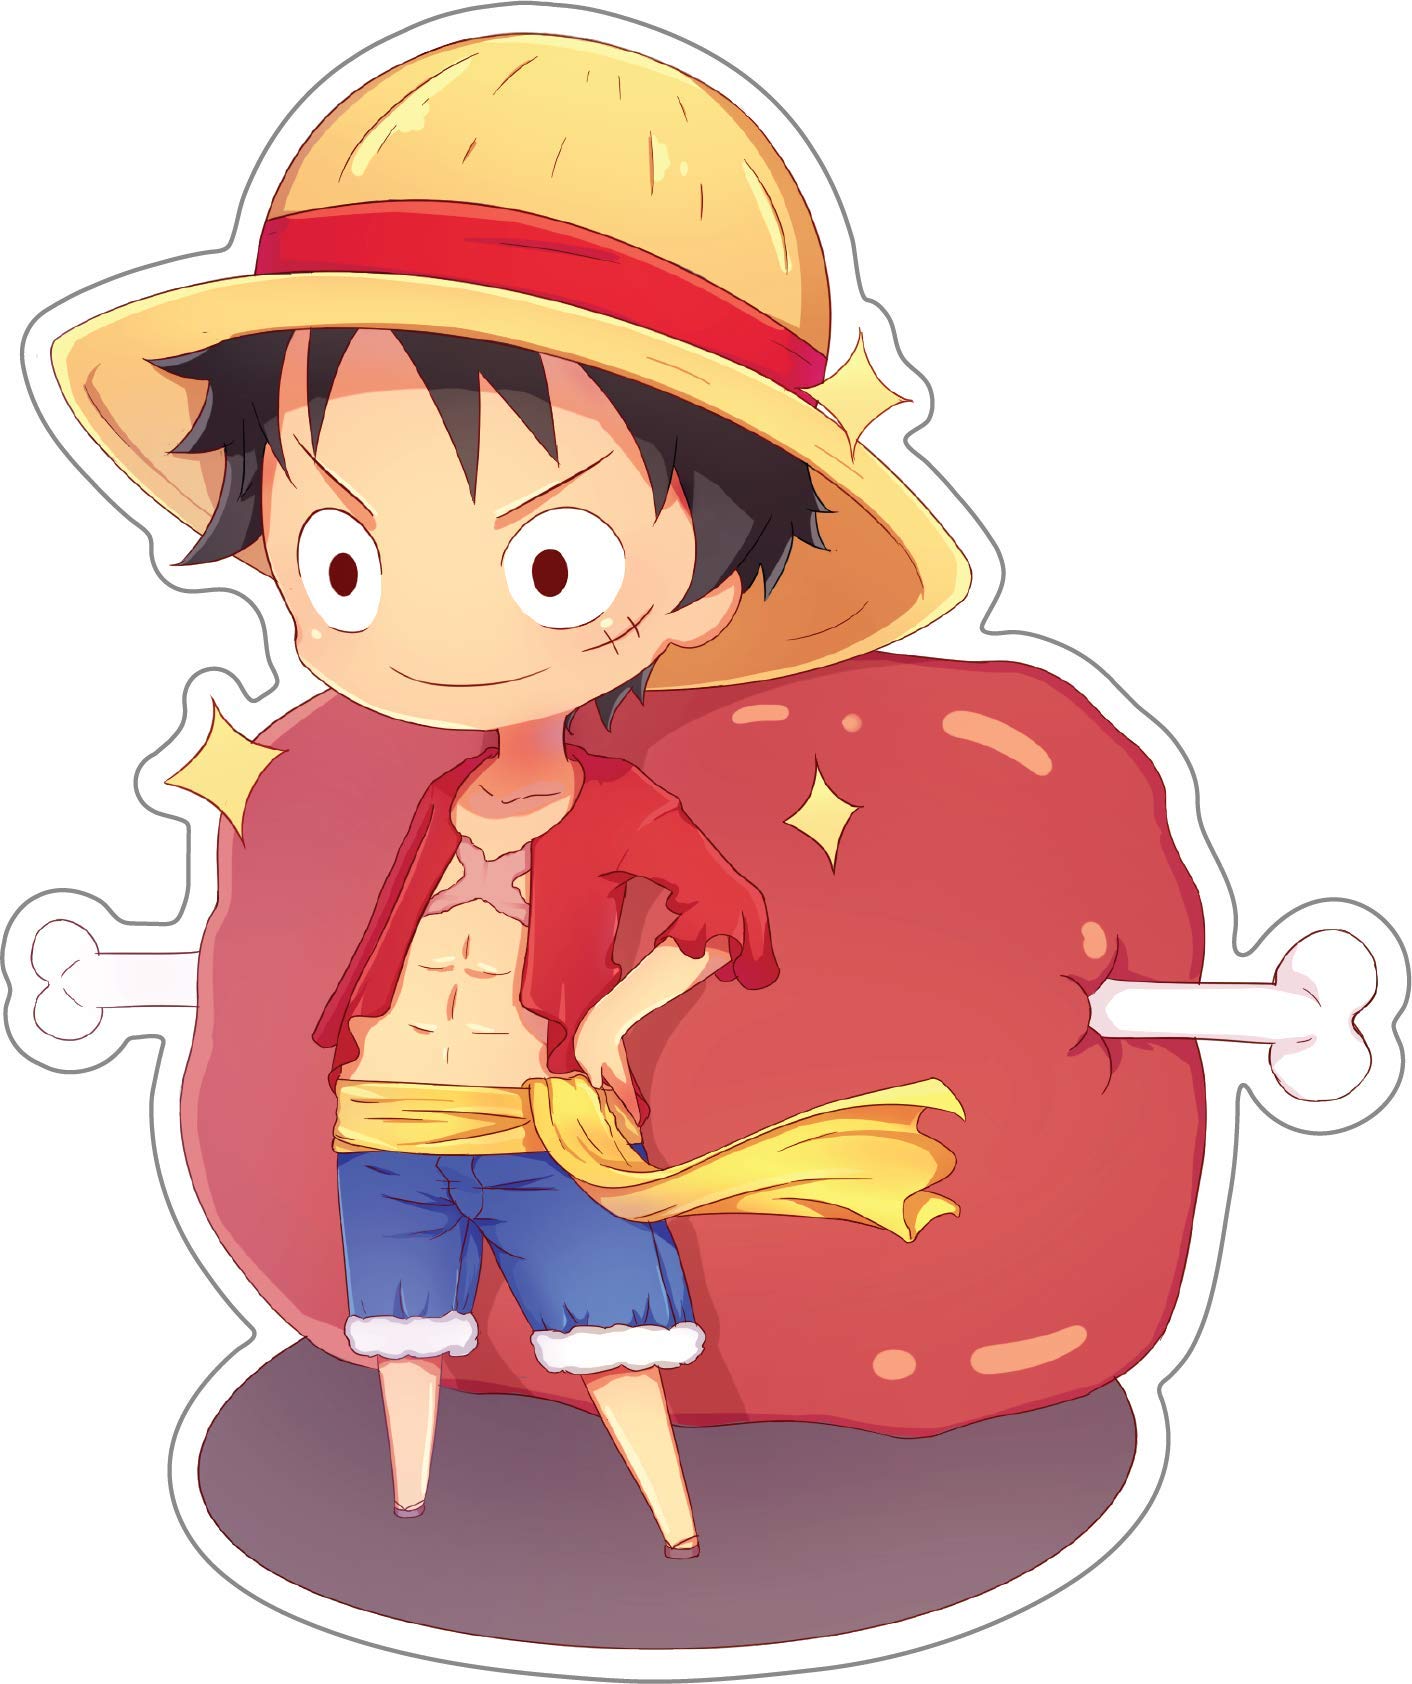 Mua One Piece - Luffy Chibi Decal Sticker for Car/Truck/Laptop ...